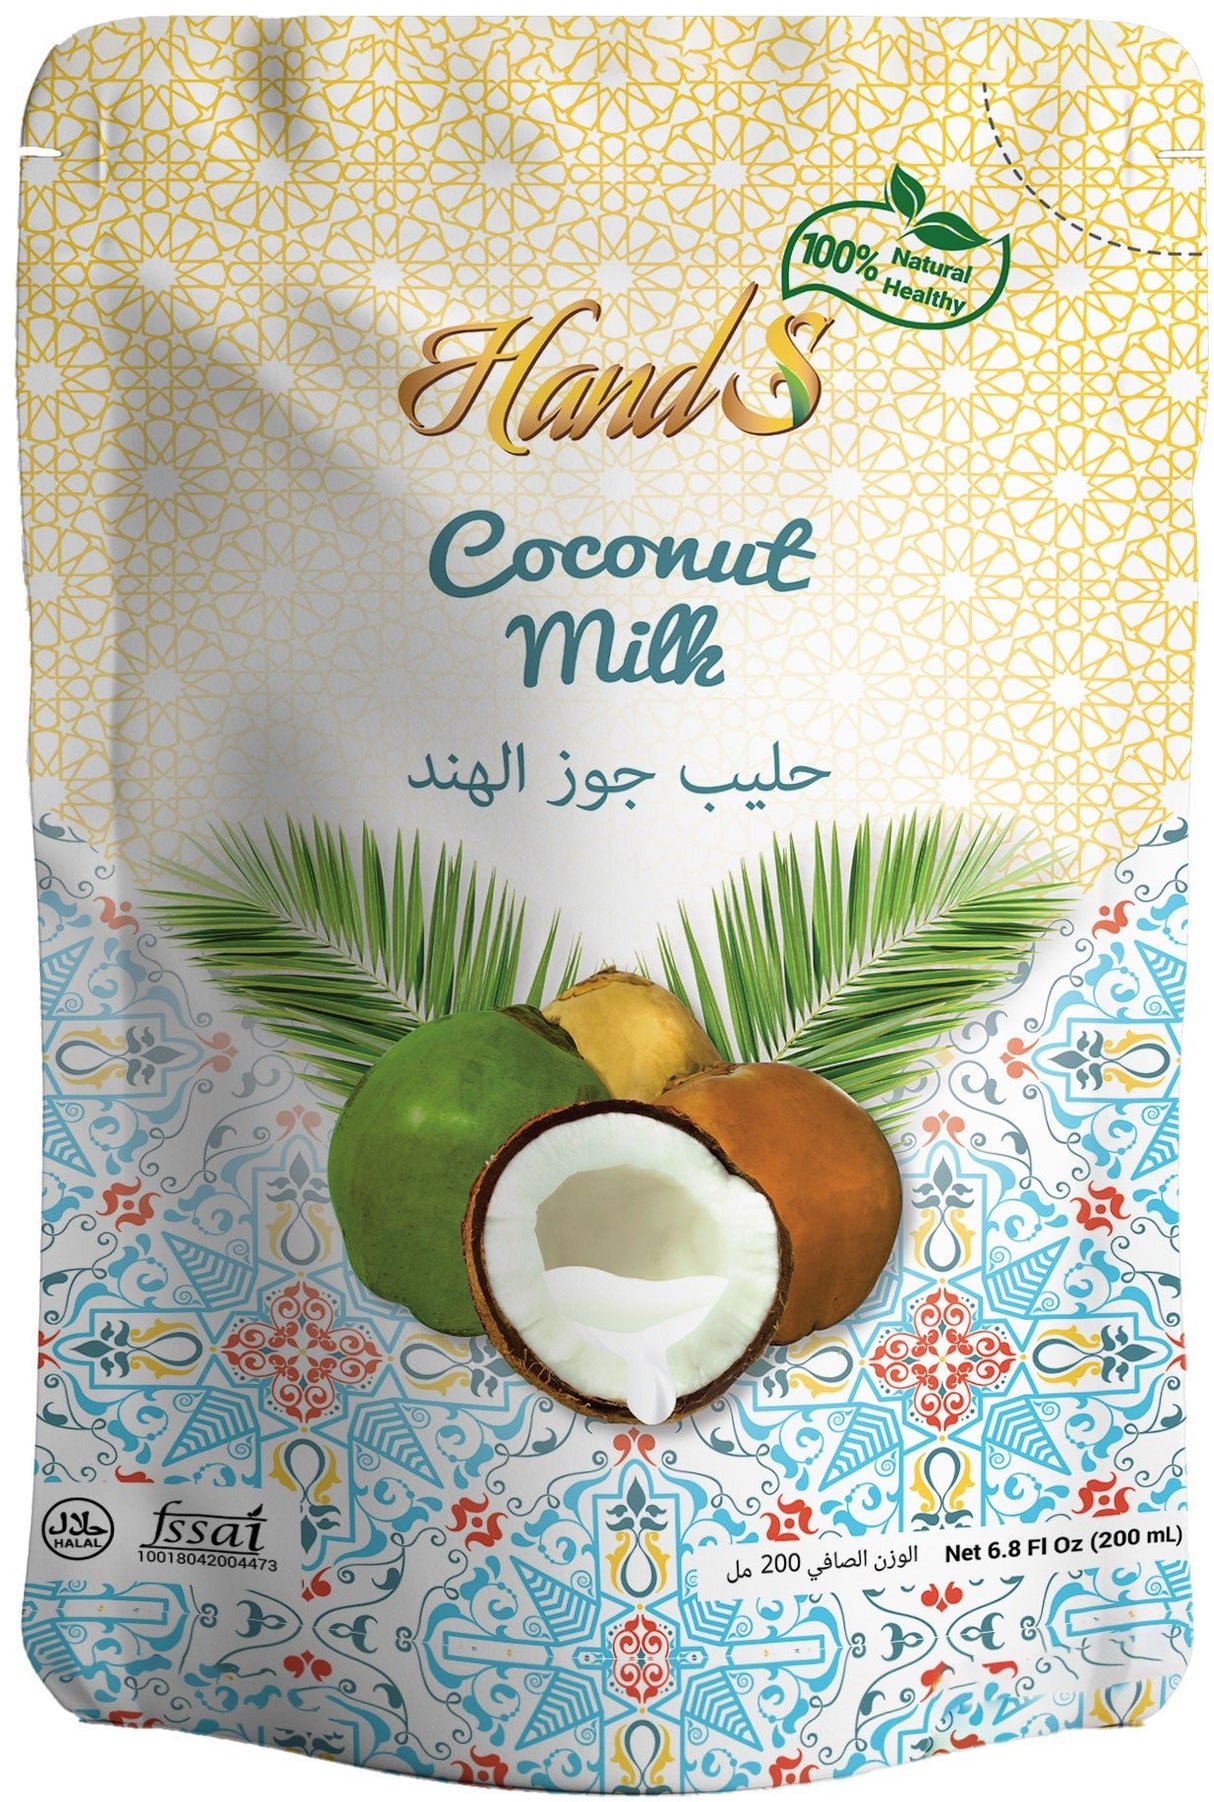 Coconut Milk (12% Fat) - Nourify